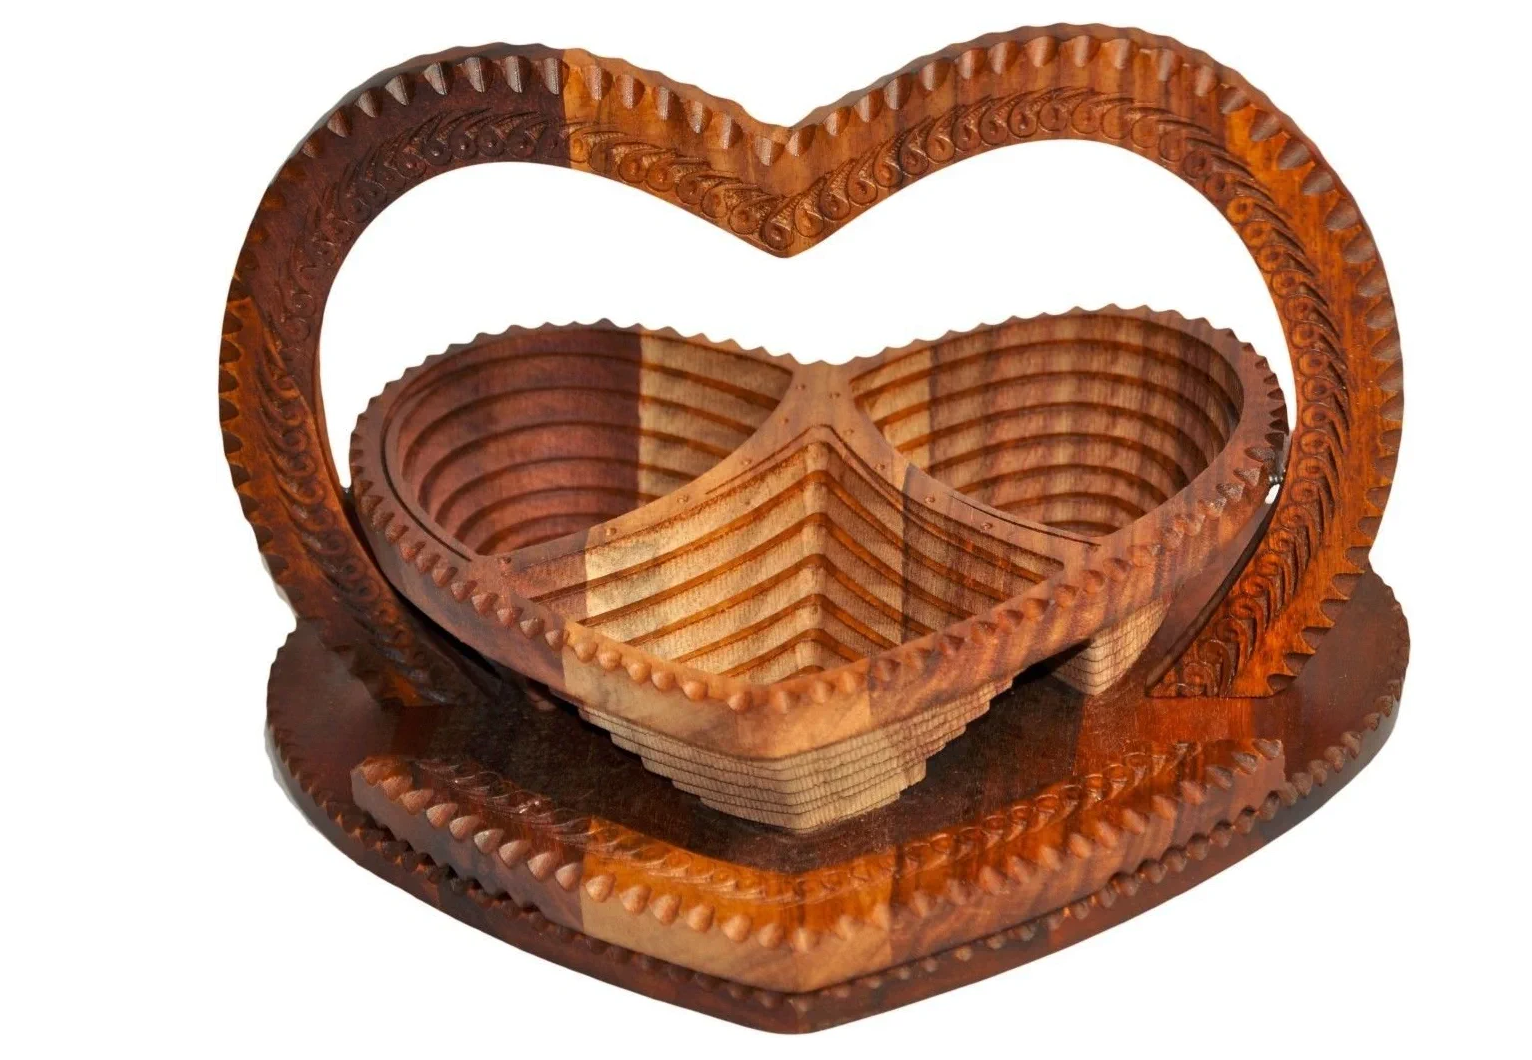 Heart - 3 Compartment - 12 inch Basket I Folding Wooden Basket I Collapsible Adjustable Basket I Decorative Rosewood color I Gift for Mom Wedding Gift Christmas